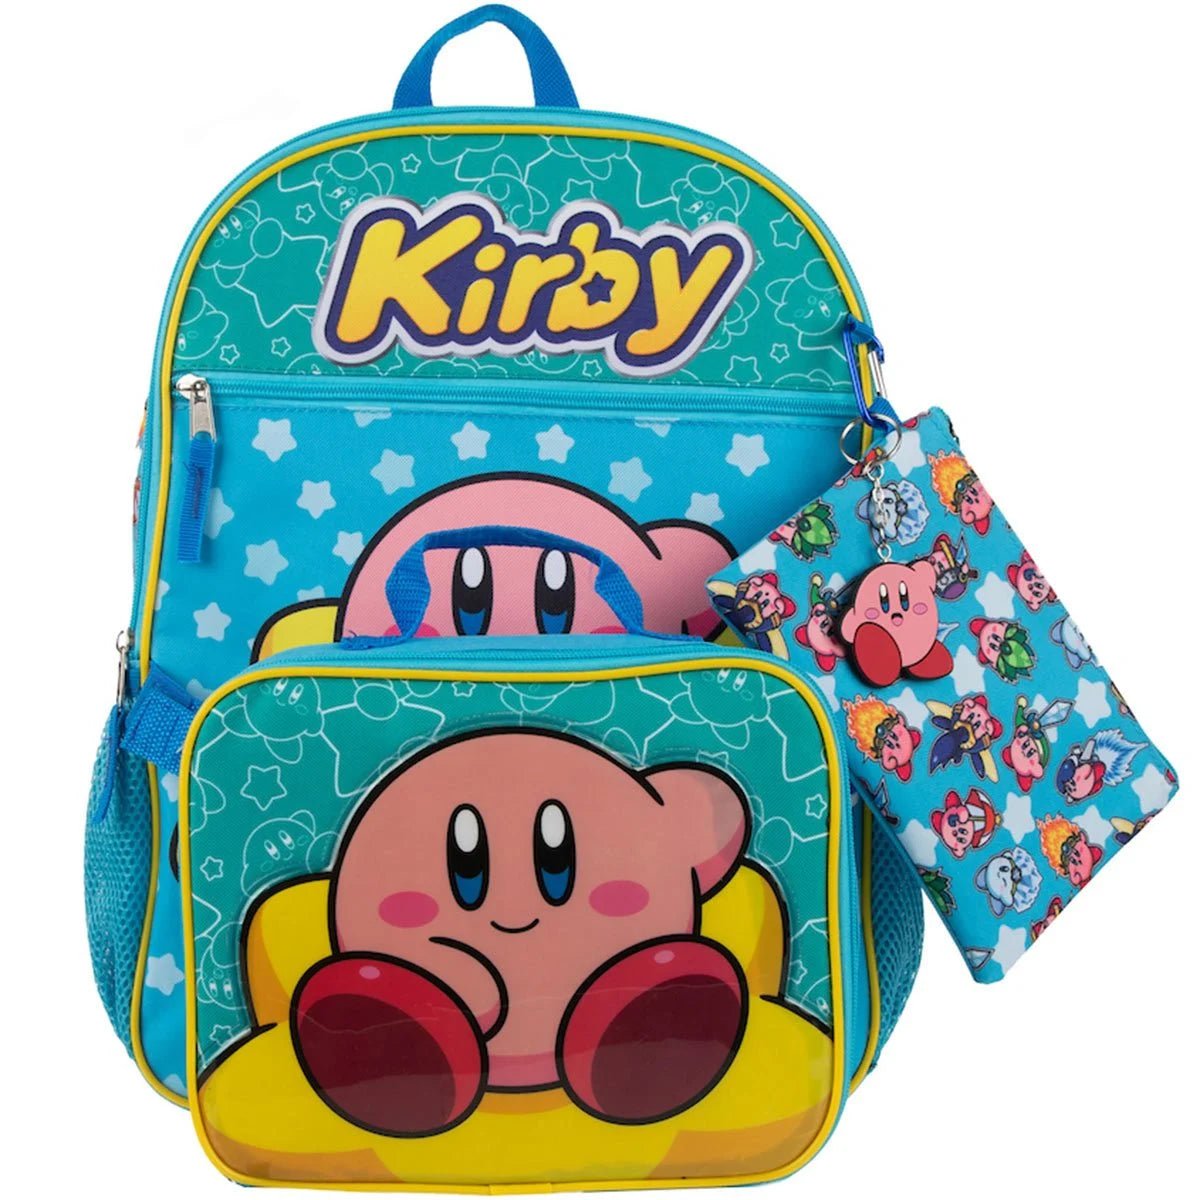 Bioworld - Kirby Backpack 5-Piece Set - Good Game Anime